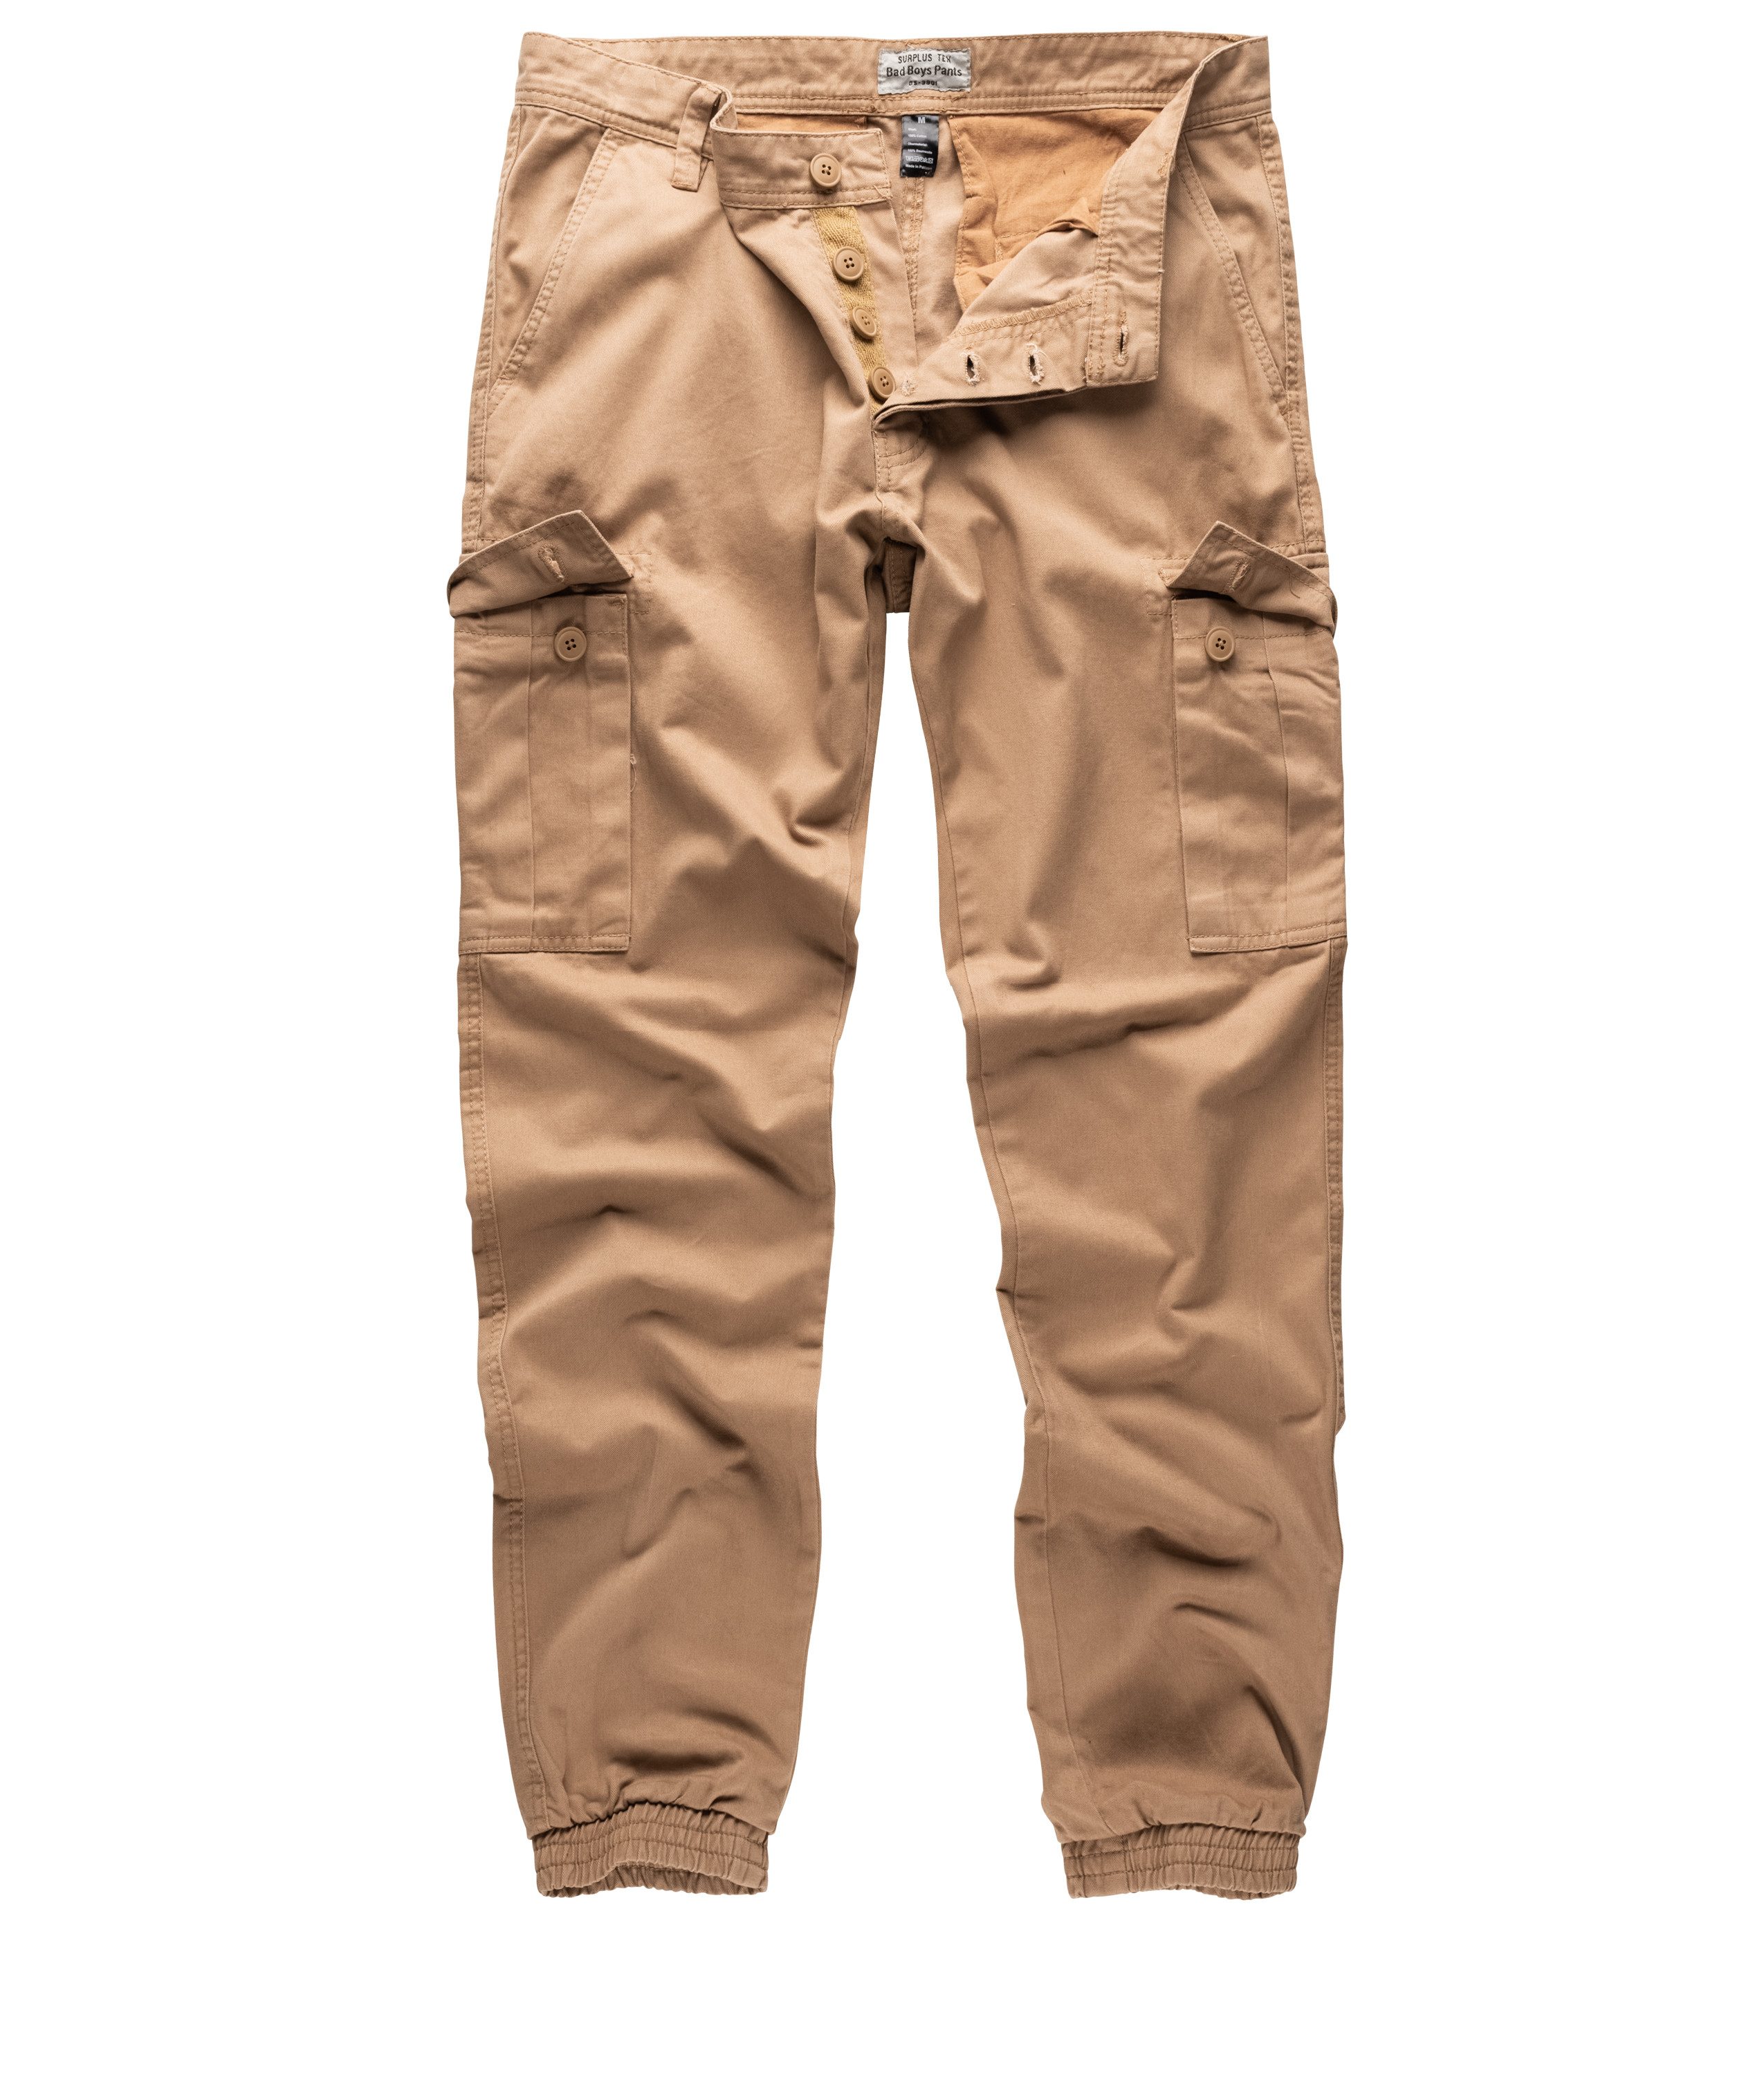 Surplus Raw Vintage Cargohose BAD BOYS PANTS Cargohose Hose Trousers beige